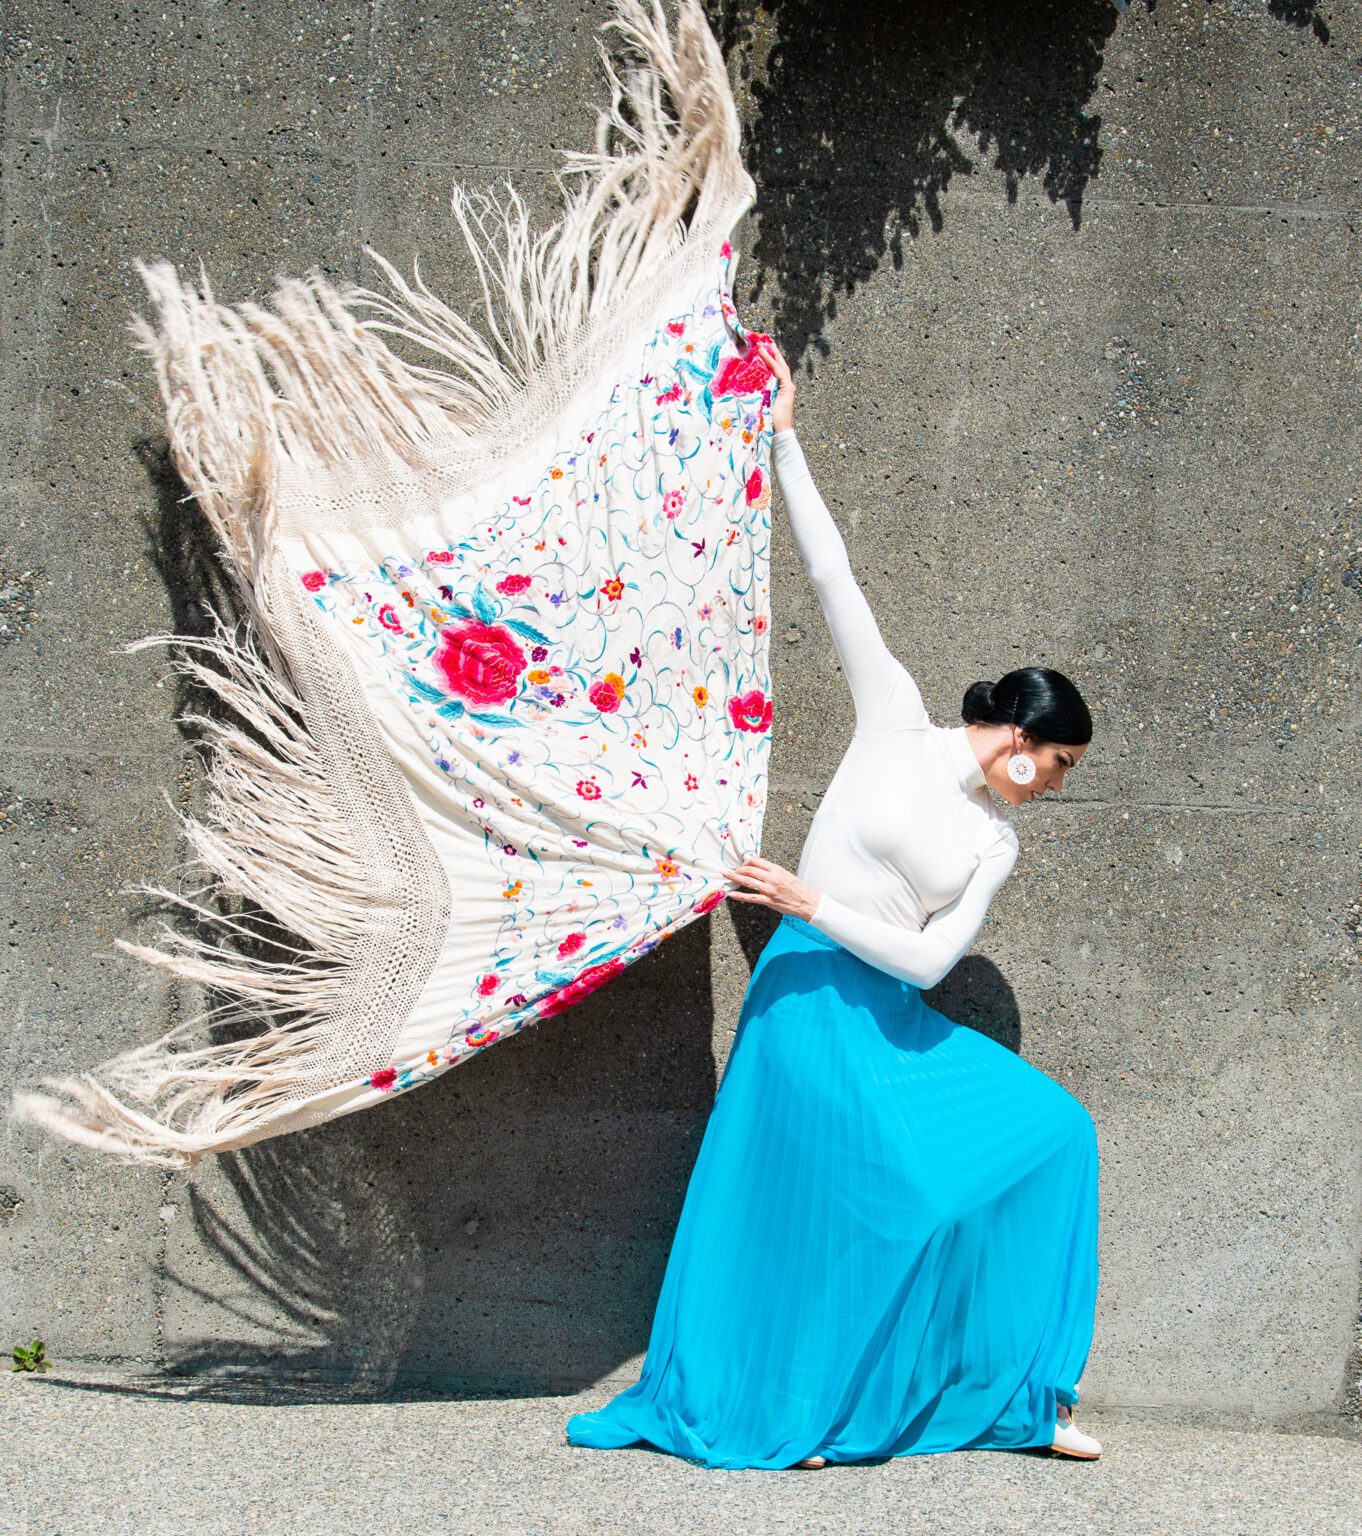 Flamenco dancer Savannah Fuentes and singer/multi-instrumentalist Diego Amador Jr. will perform Wednesday